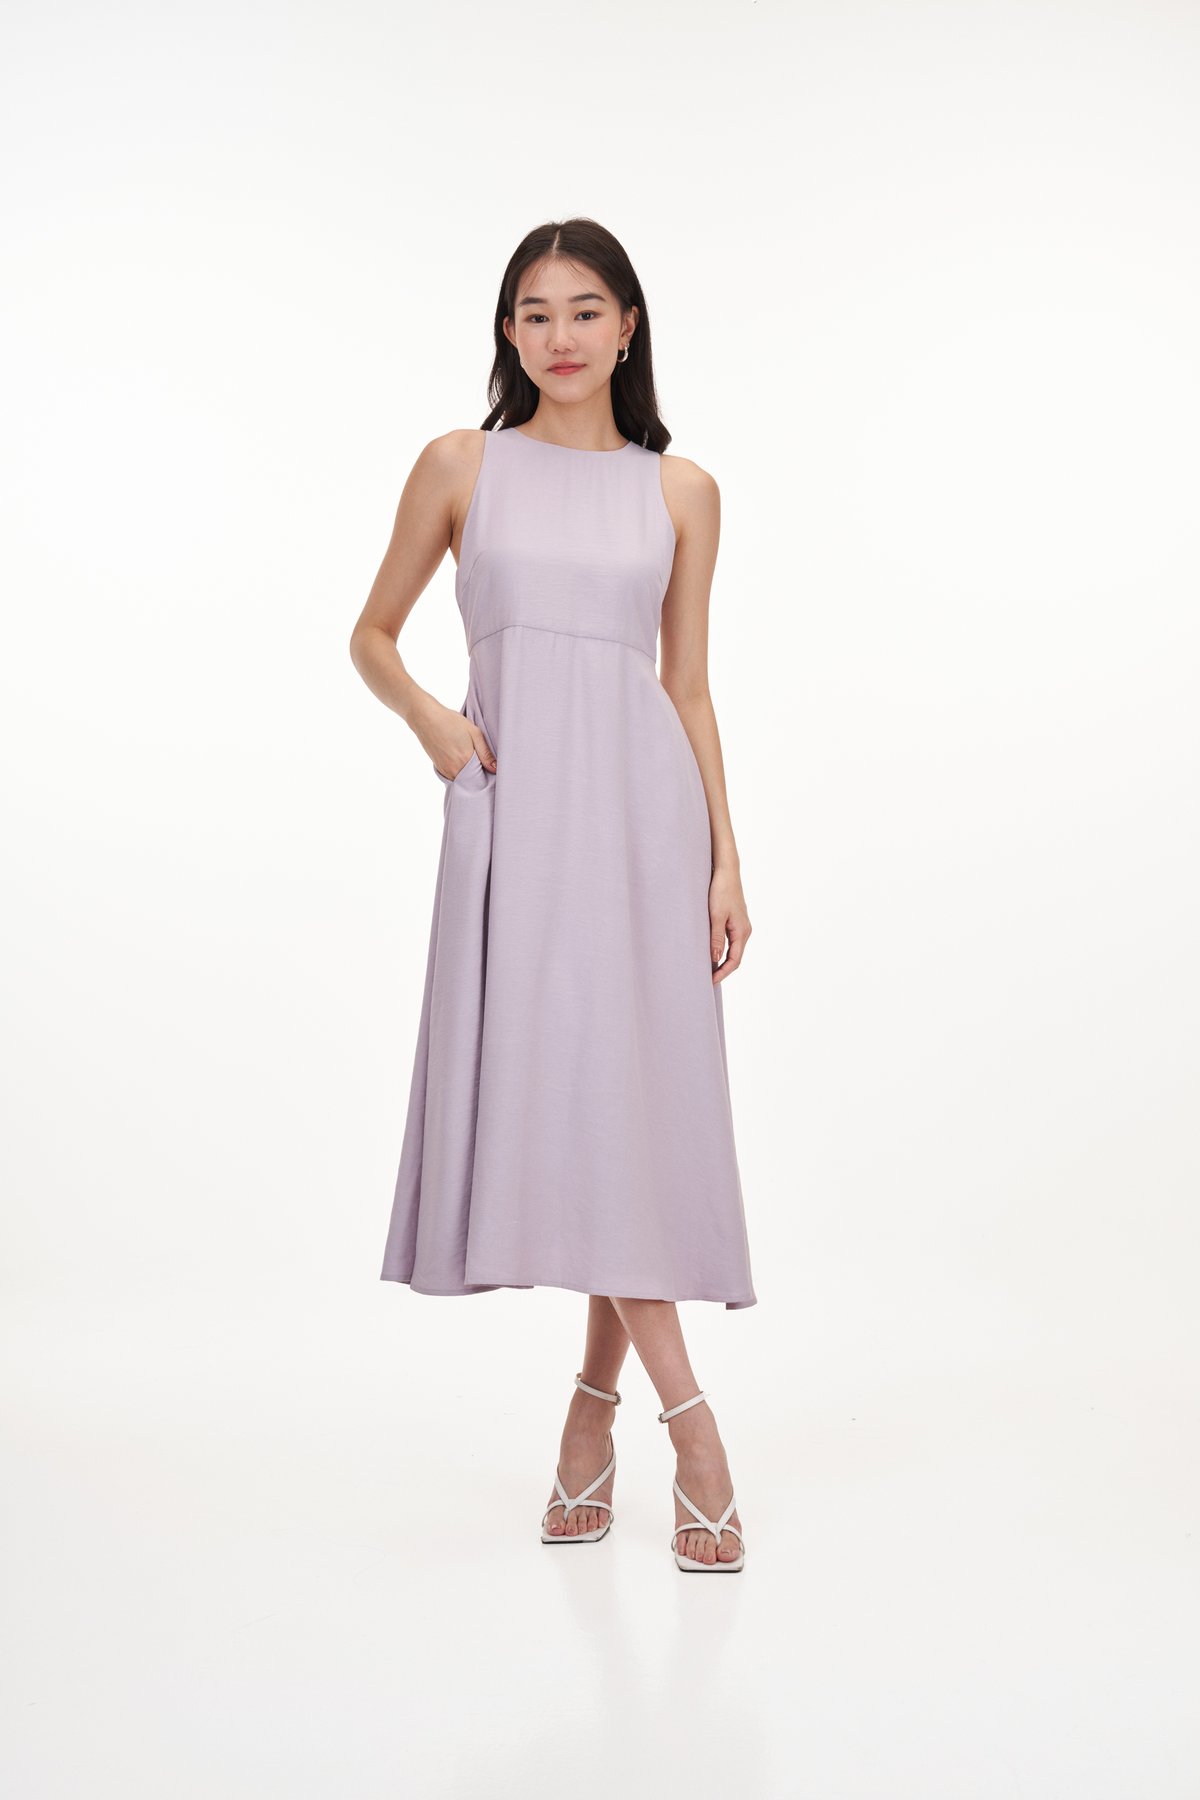 Calista Midaxi Dress in Lilac